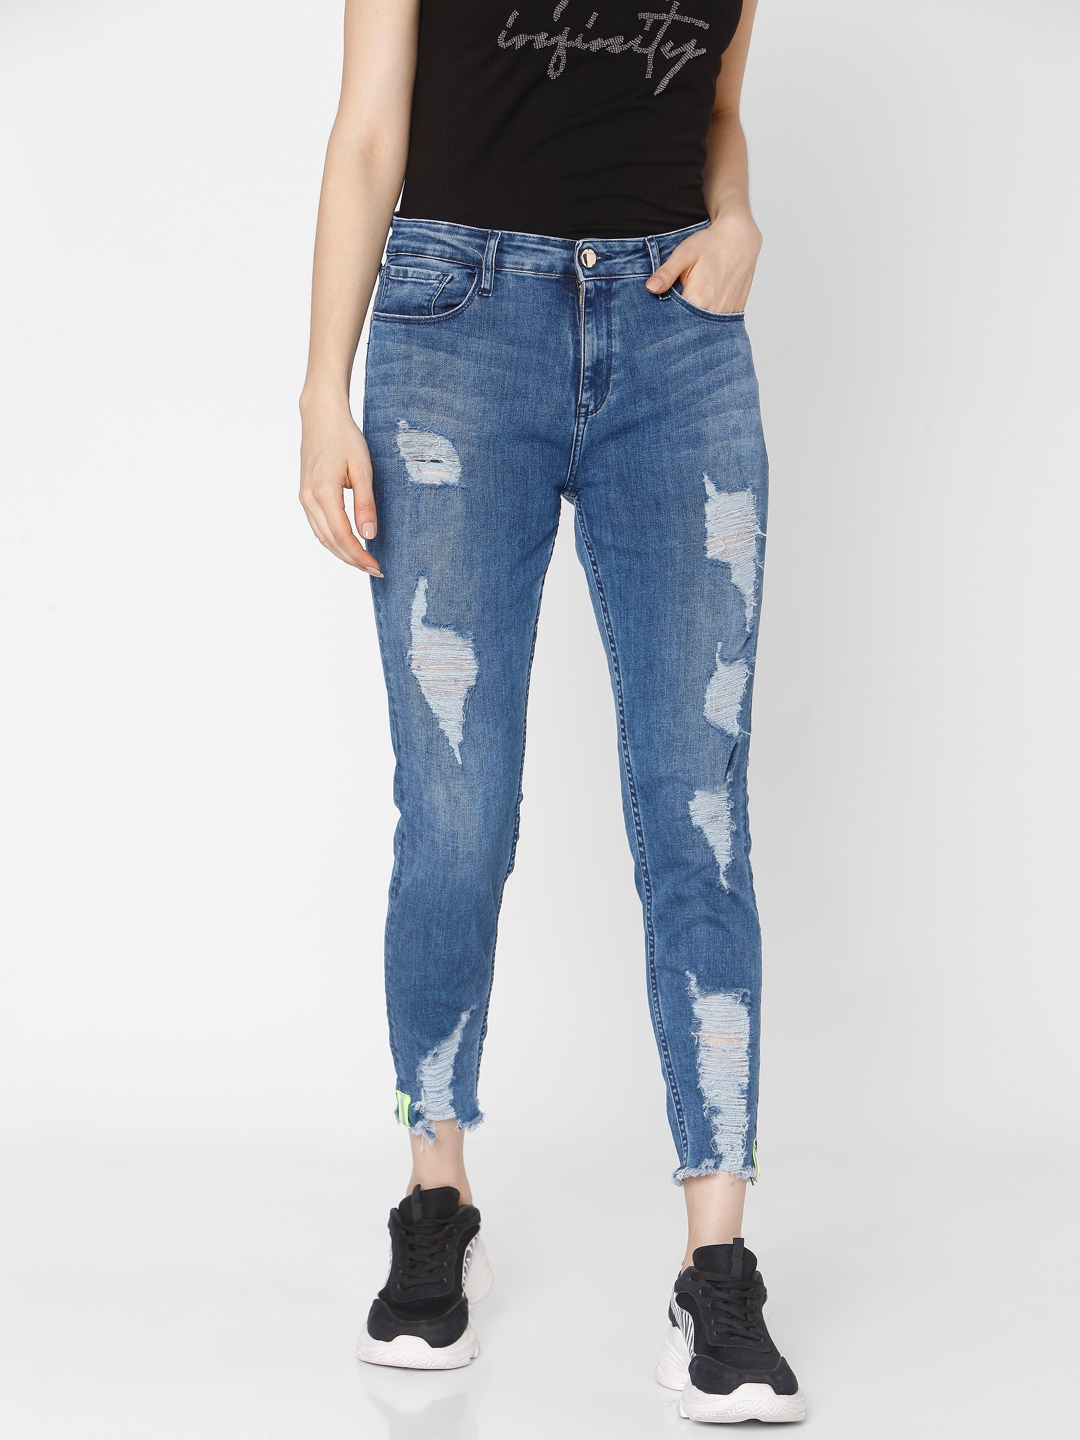 spykar | Women's Blue Cotton Ripped Skinny Jeans 1